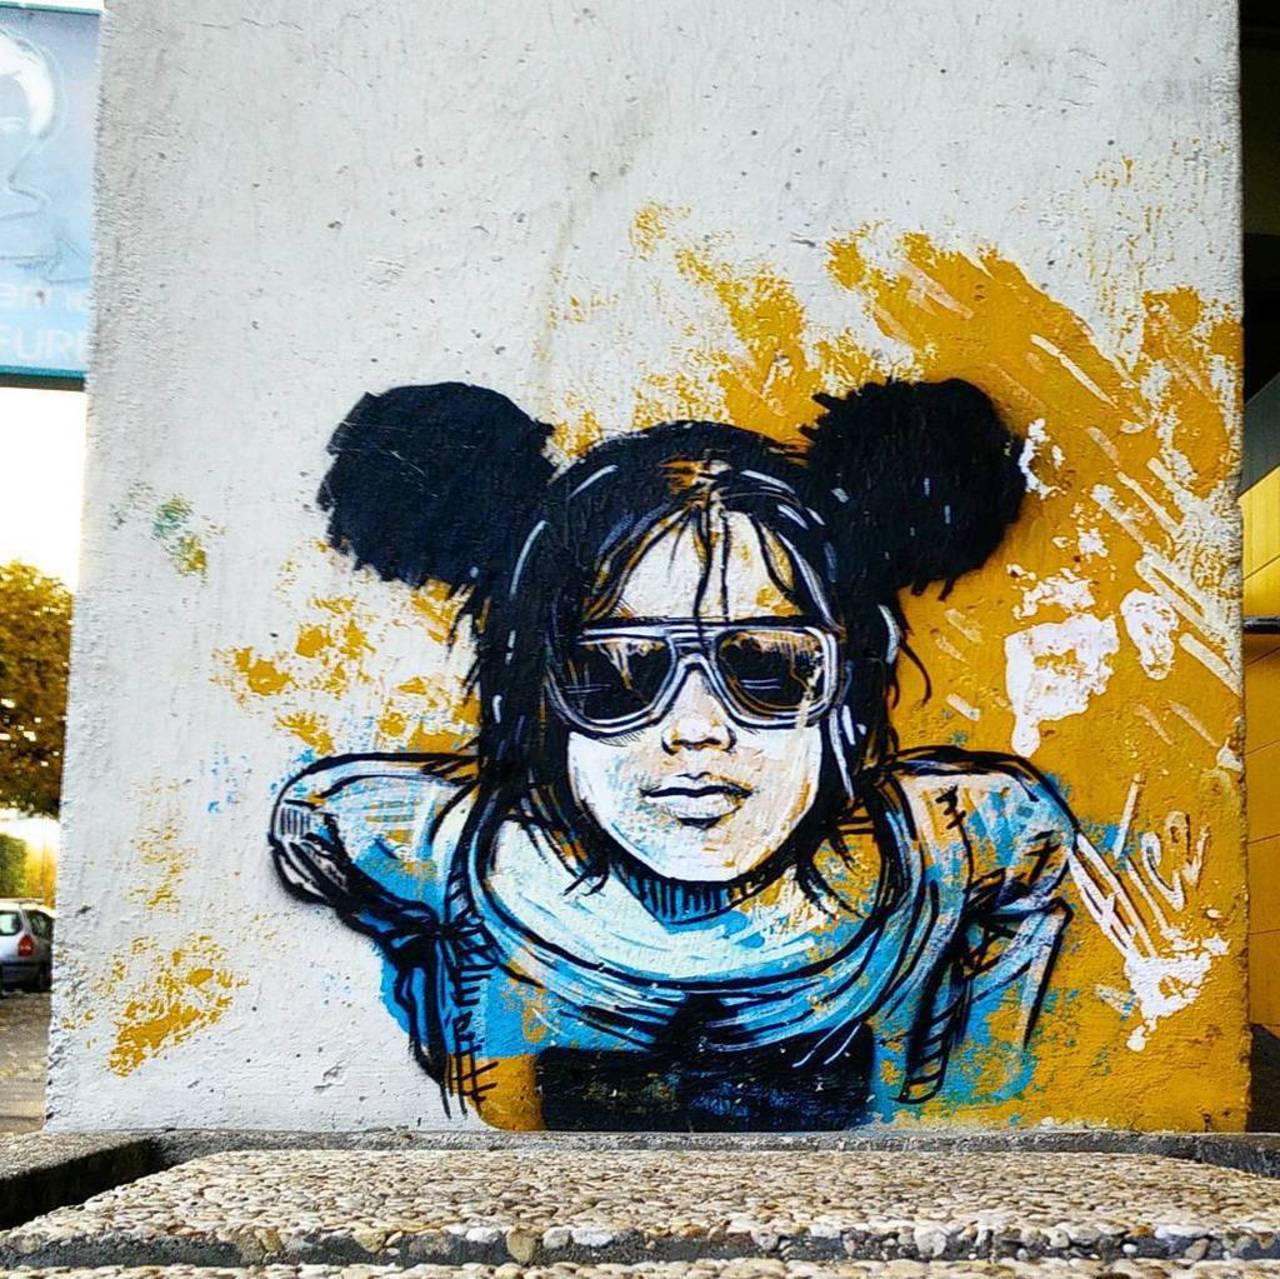 RT @StArtEverywhere: By @alicepasquini #alicepasquini 
#streetart #streetartparis #parisstreetart #parisgraffiti #graffiti #graffitiart … https://t.co/ajBViCiolB